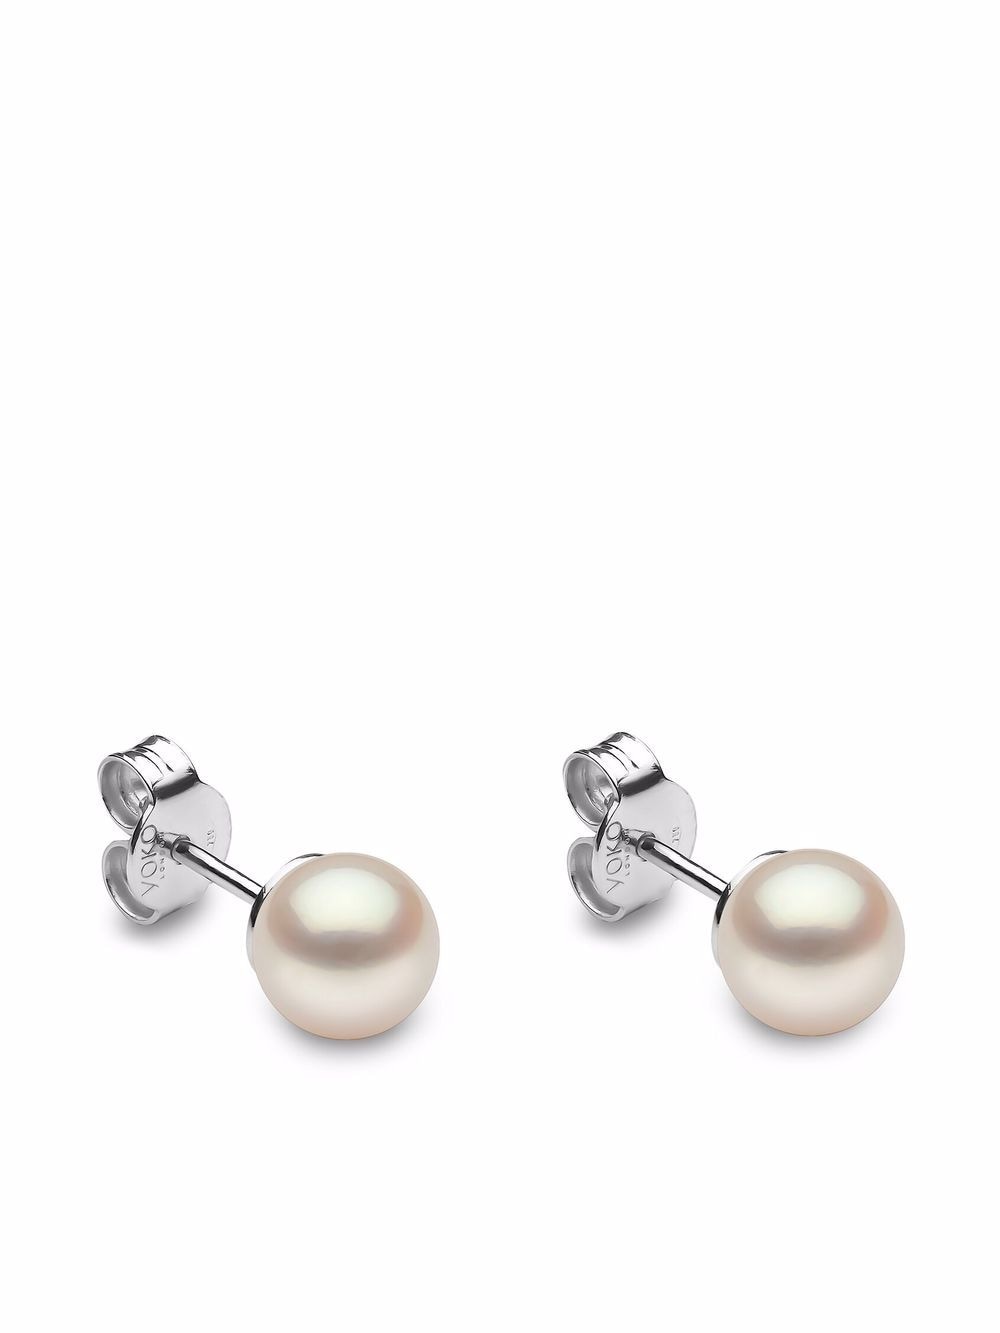 Yoko London 18kt white gold Classic 6mm Freshwater pearl stud earrings - Silver von Yoko London